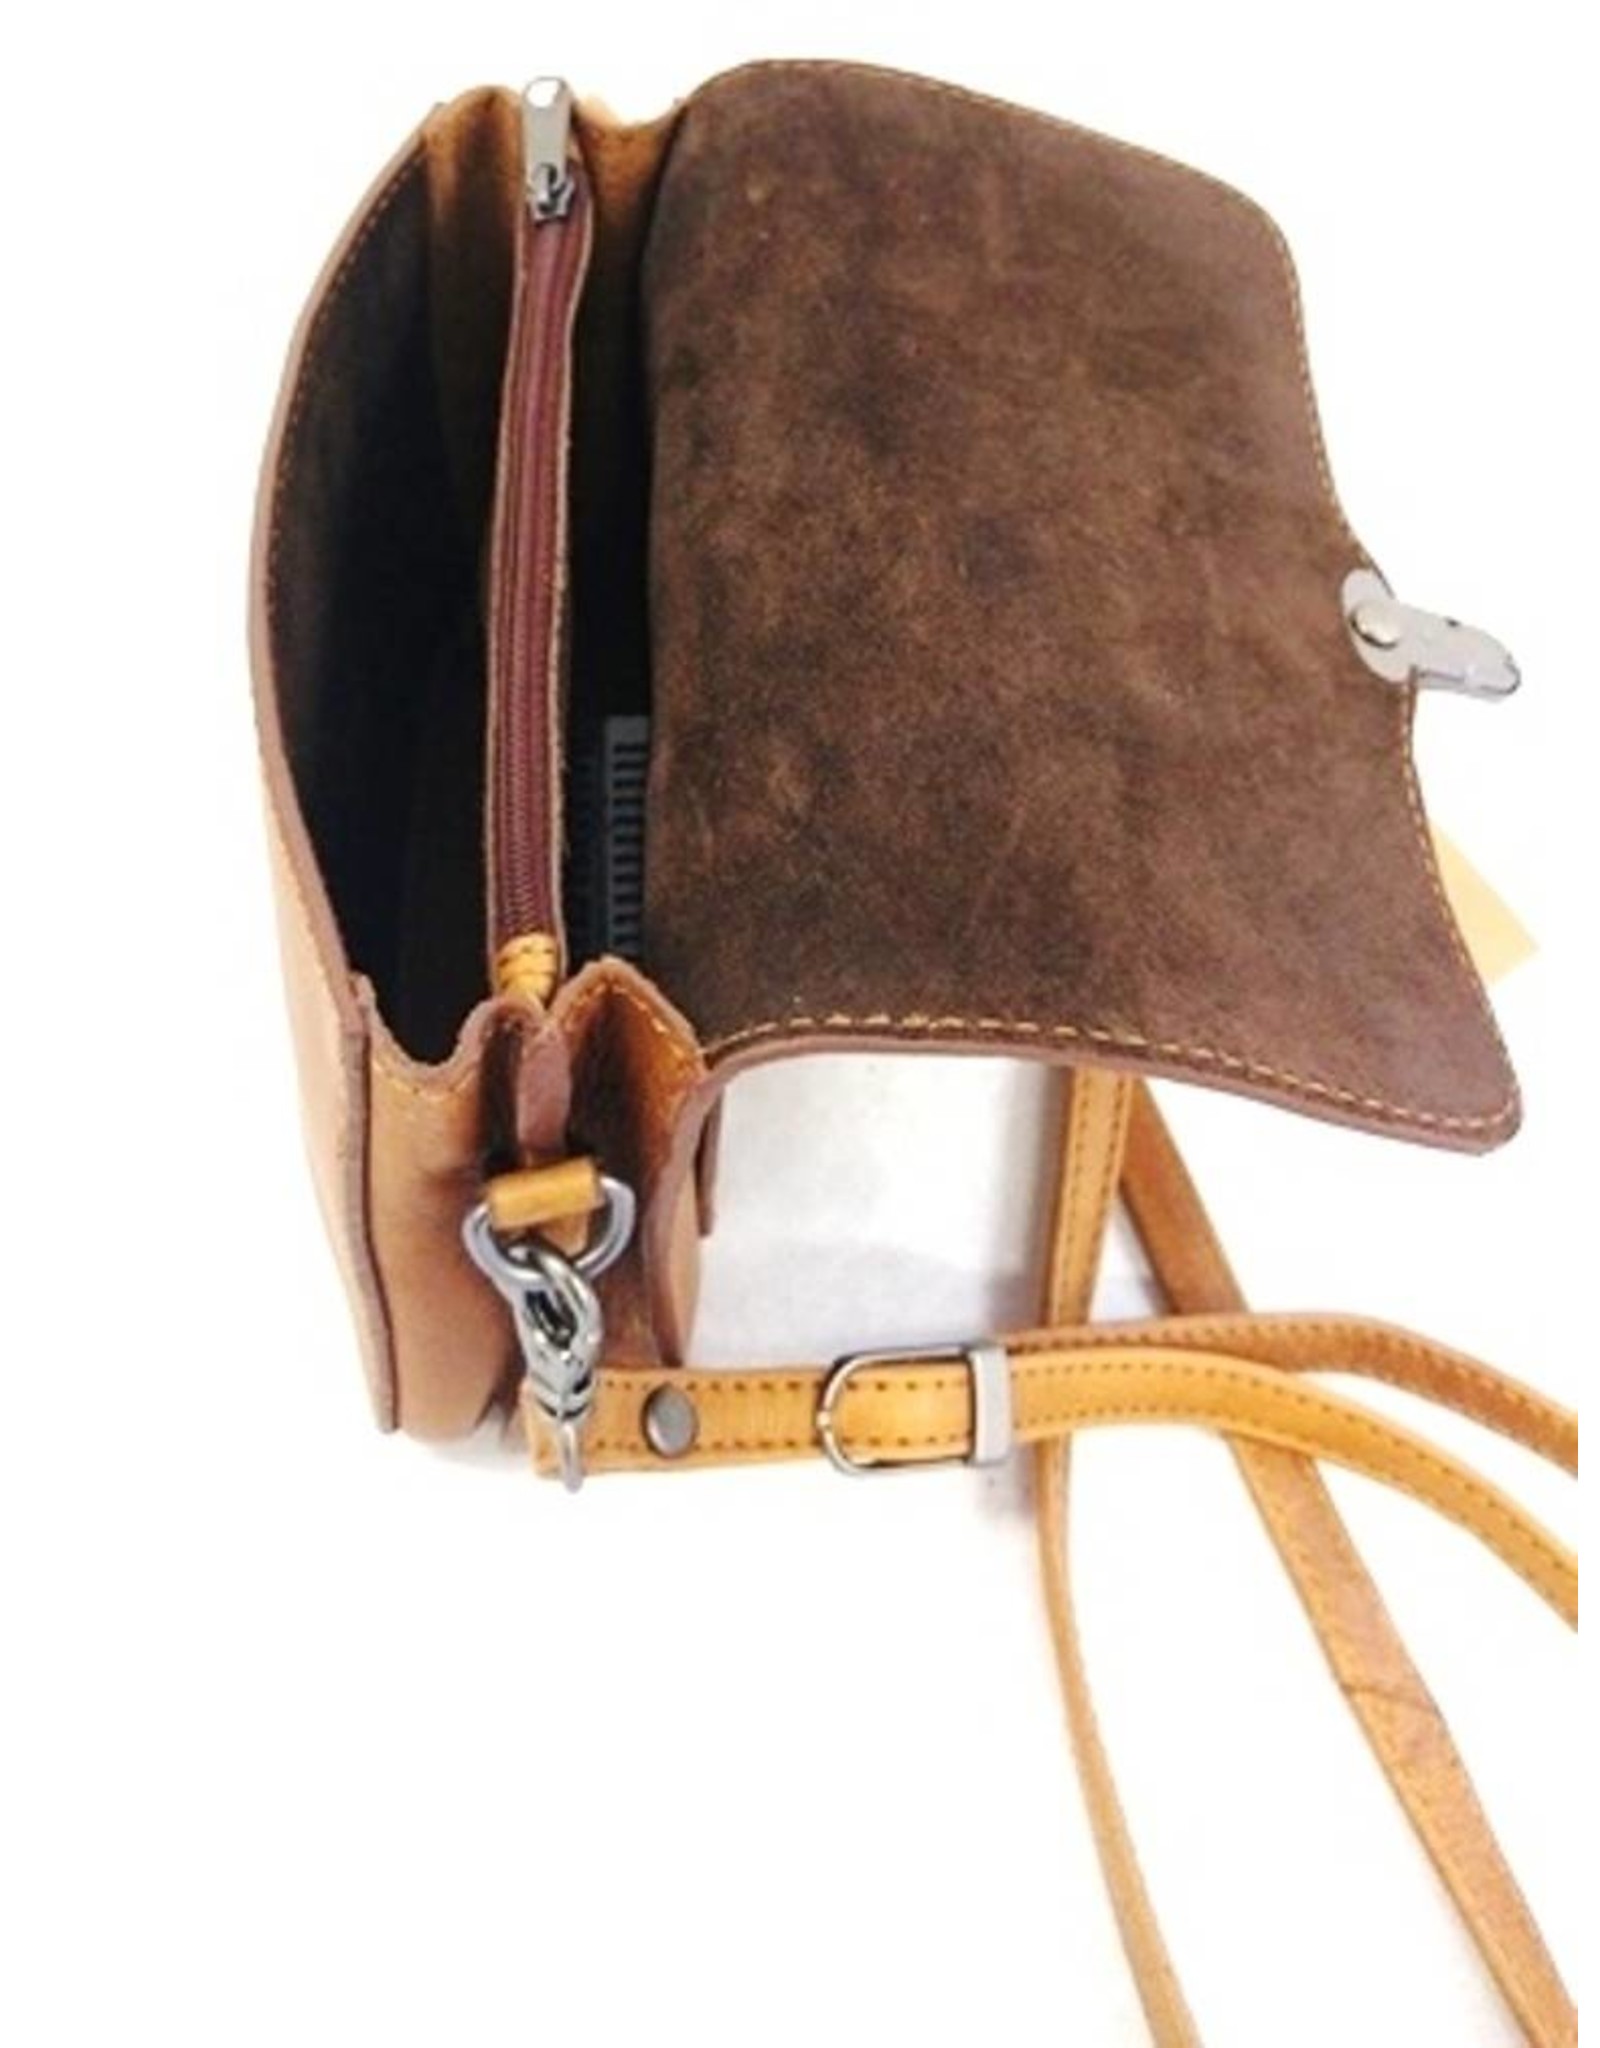 HillBurry Leather bags - HillBurry Leather Shoulder bag 3279cg